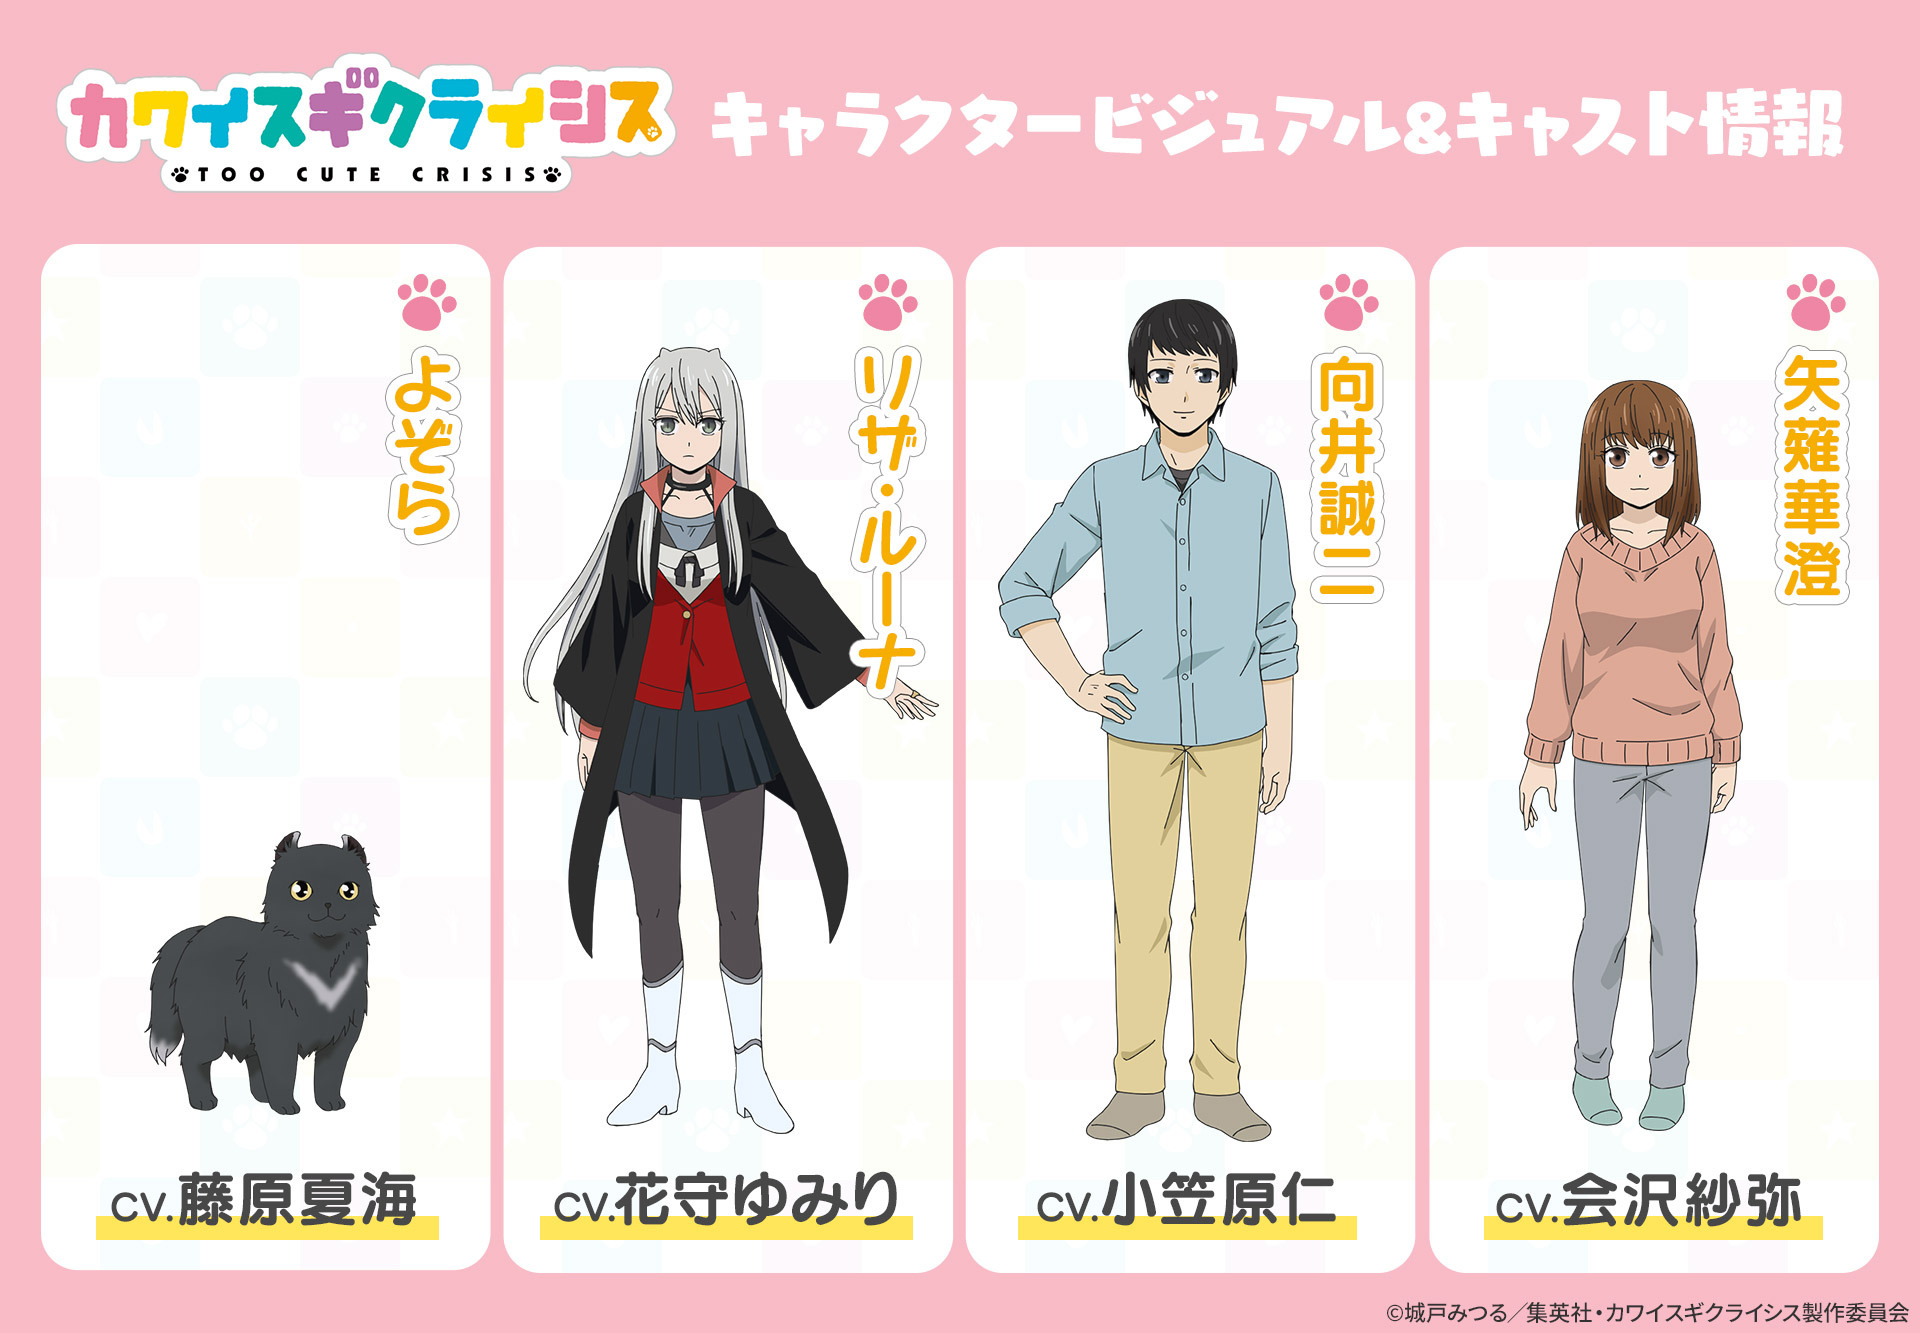 Too Cute Crisis anime main cast